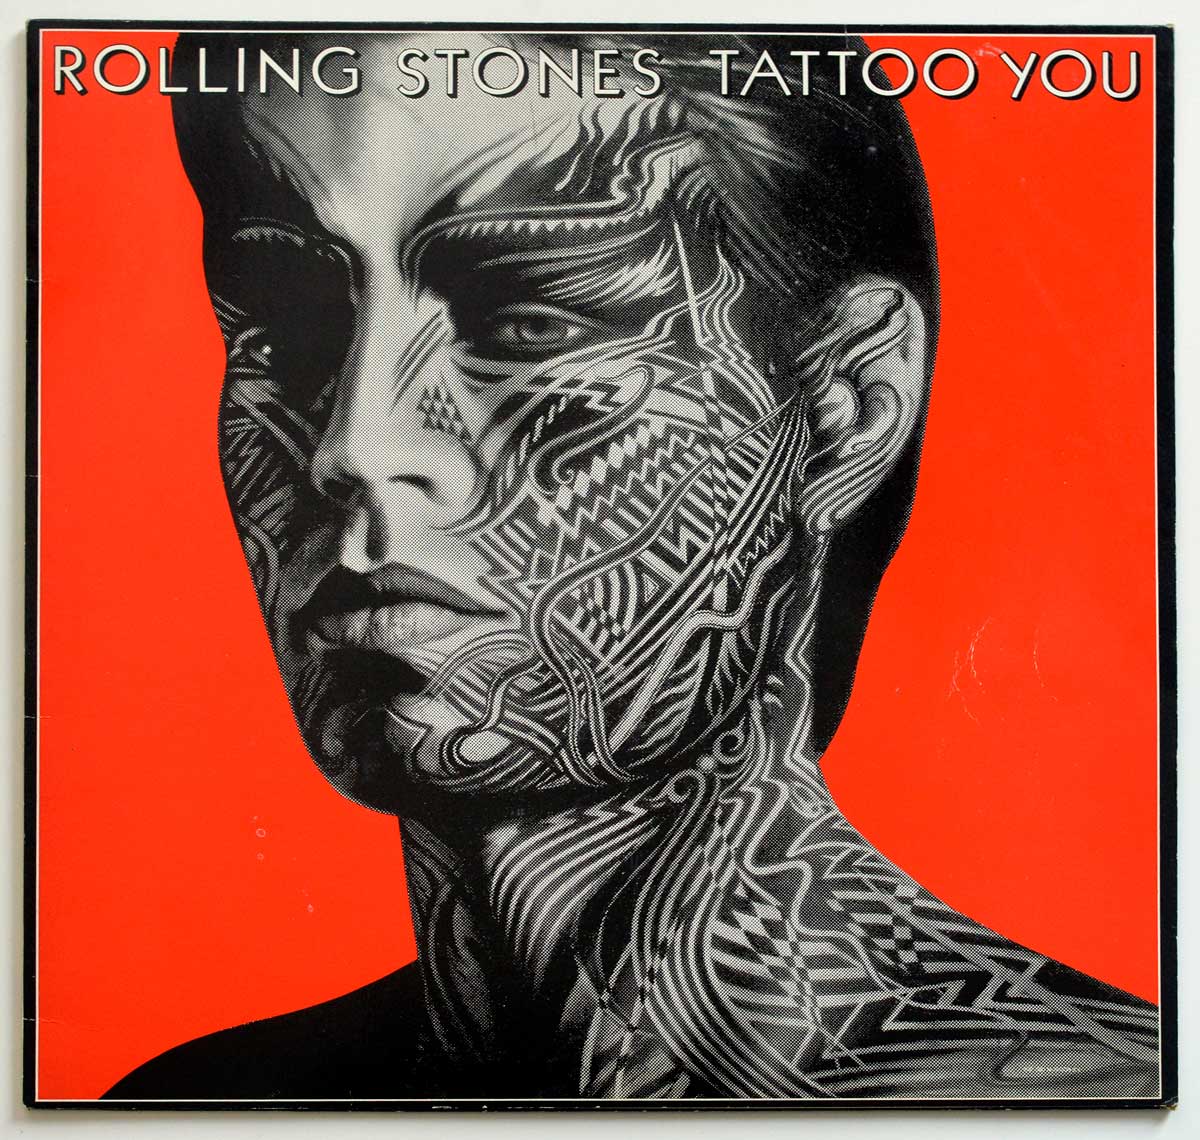 Rolling Stones Tattoo You European Release 12 Lp Vinyl Album Cover Gallery Information Vinylrecords